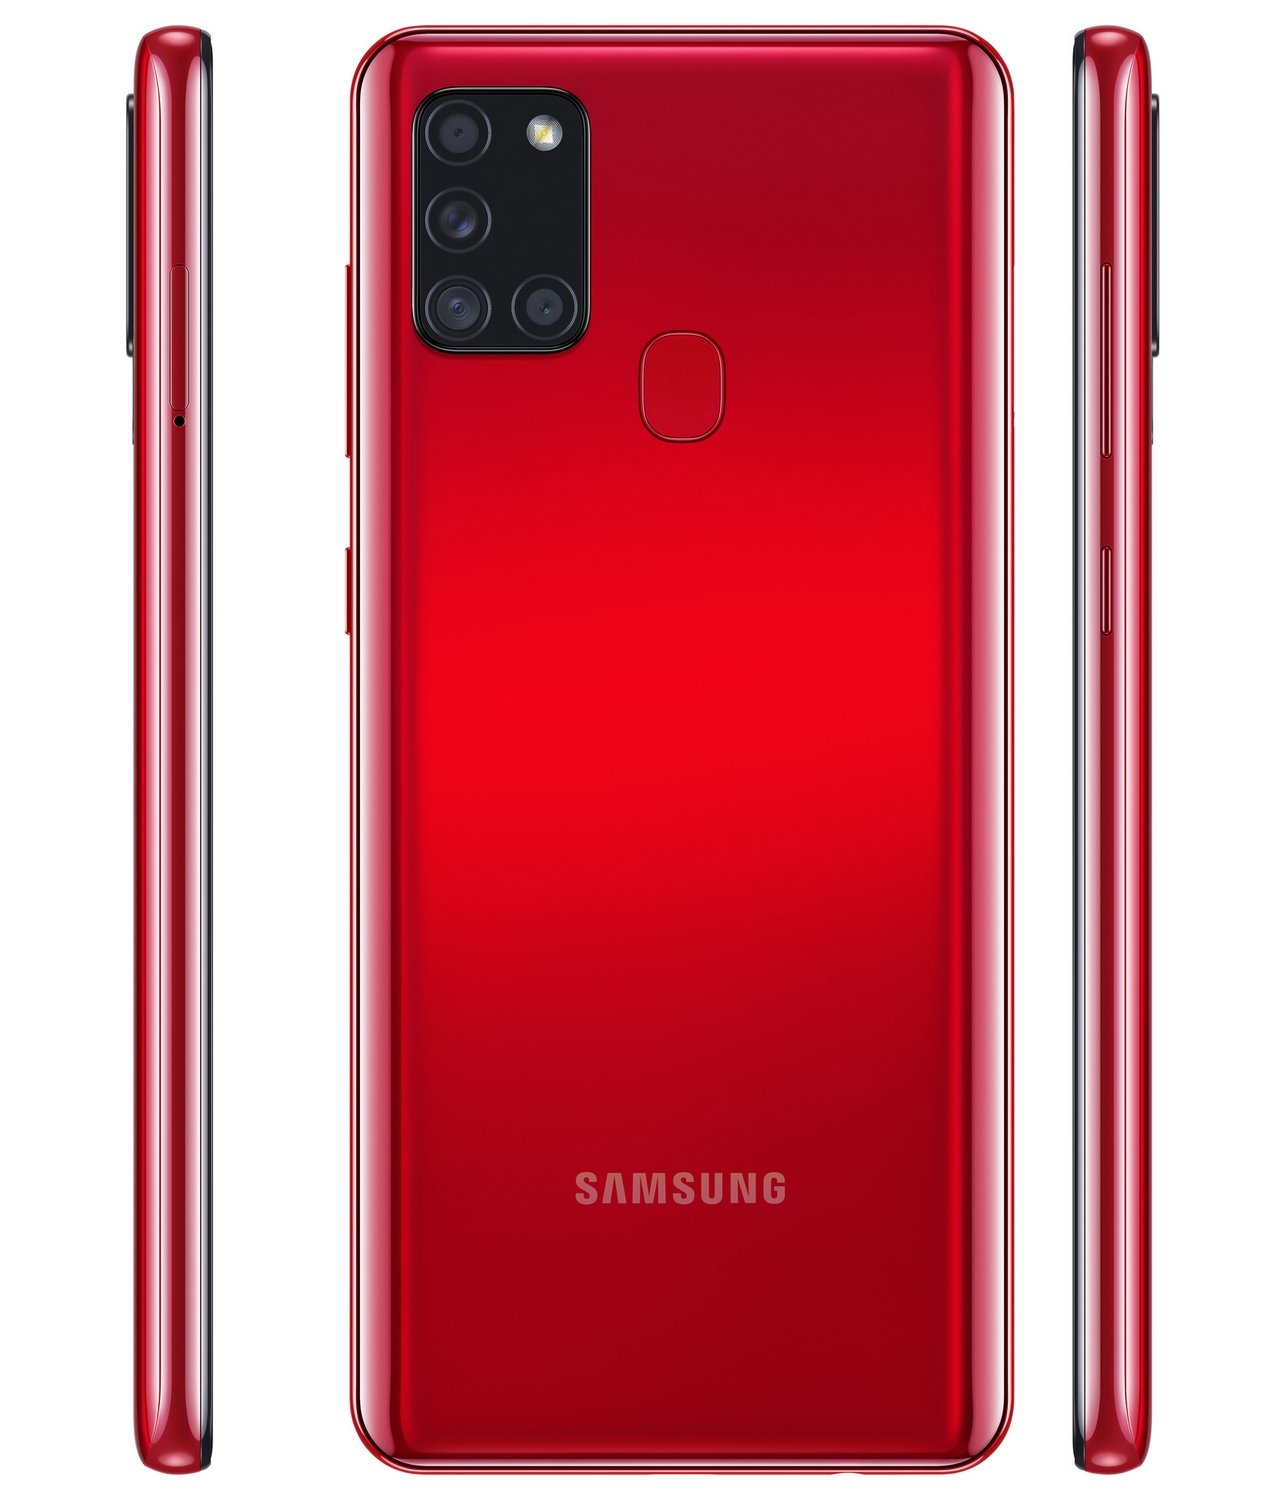 Samsung galaxy a21s specs